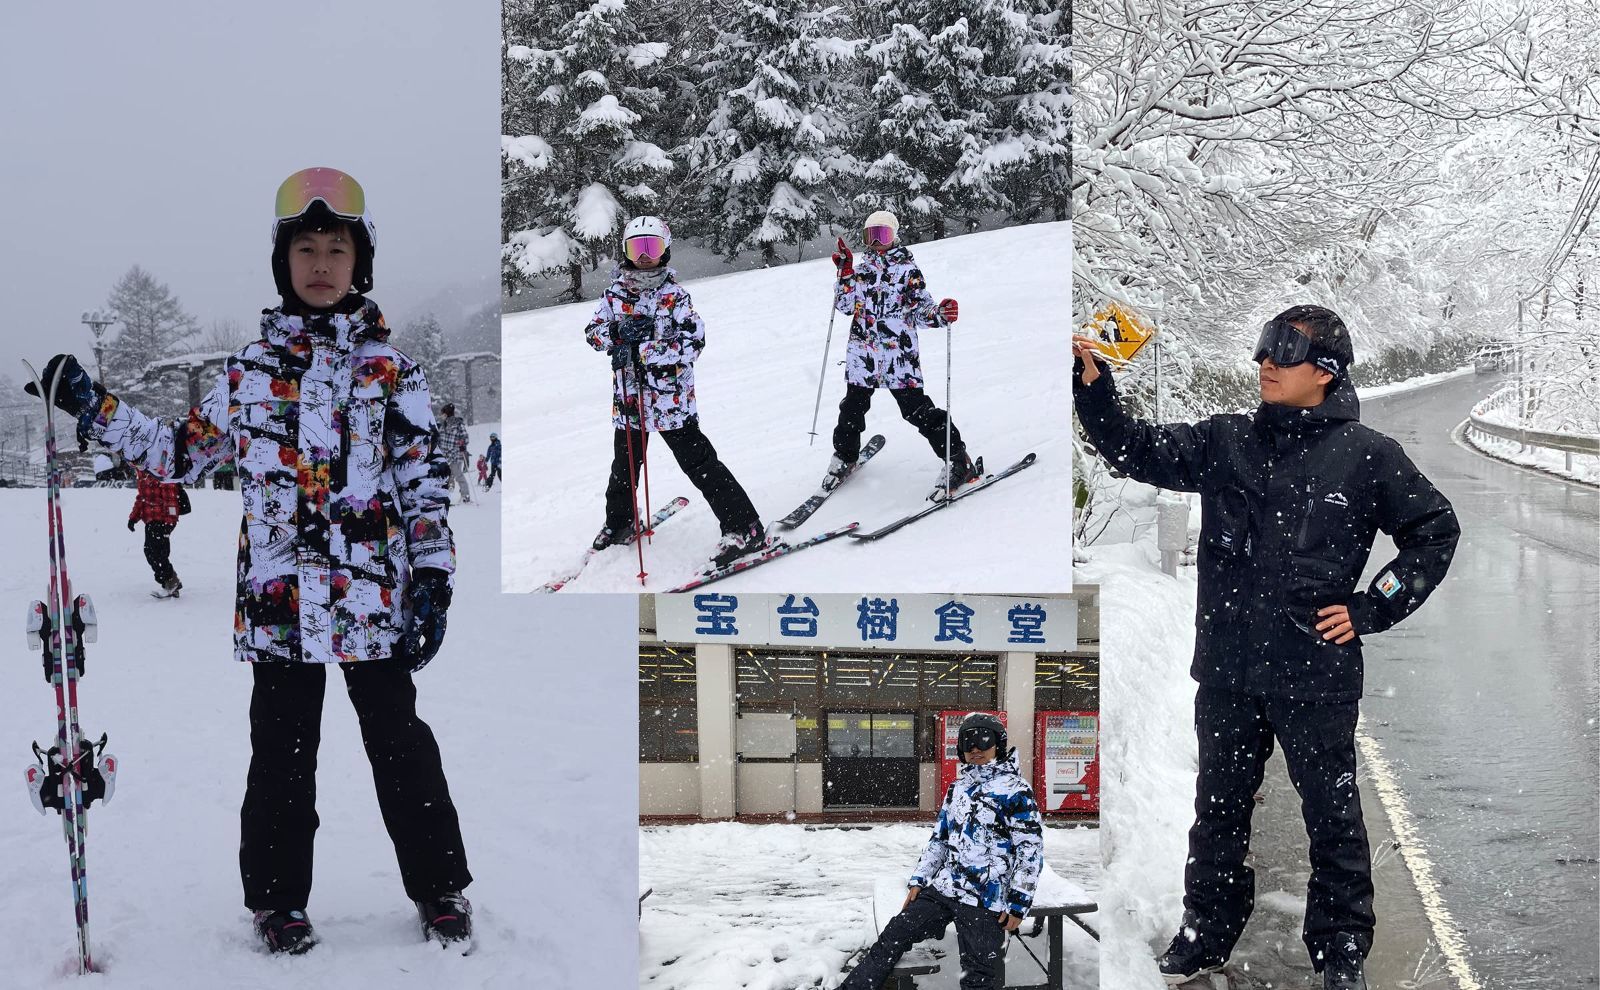 MARUYUKI] 公式正規品 スノーボードウェア スキーウェア 肌に優しい